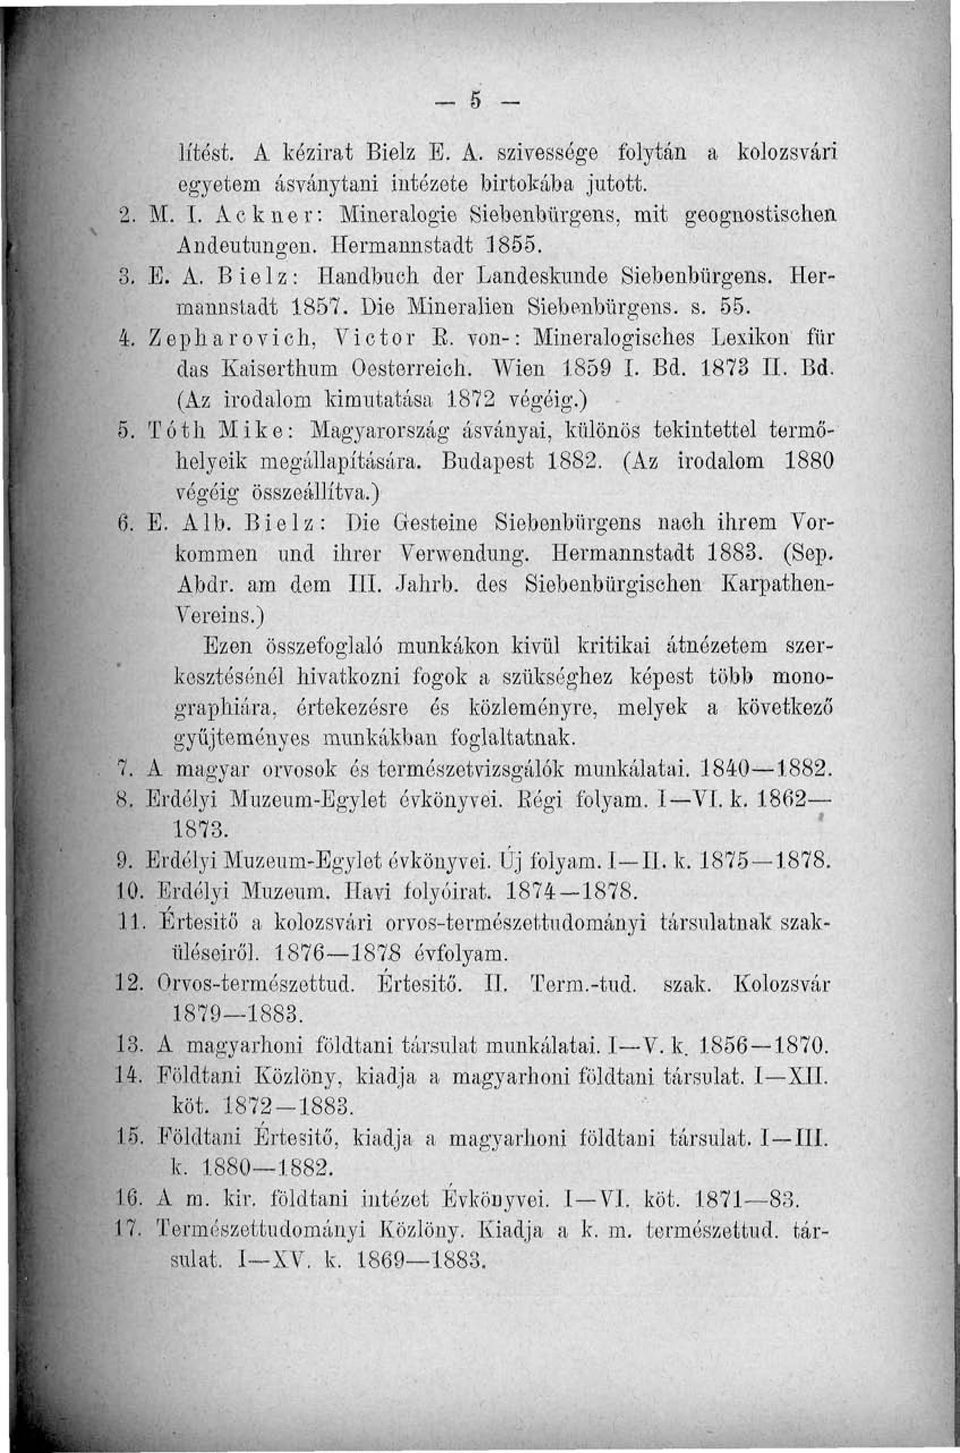 von-: Mineralogisclies Lexikon für das Kaiserthum Oesterreich. Wien 1859 I. Bd. 1873 II. Bd. (Az irodalom kimutatása 1872 végéig.) 5.